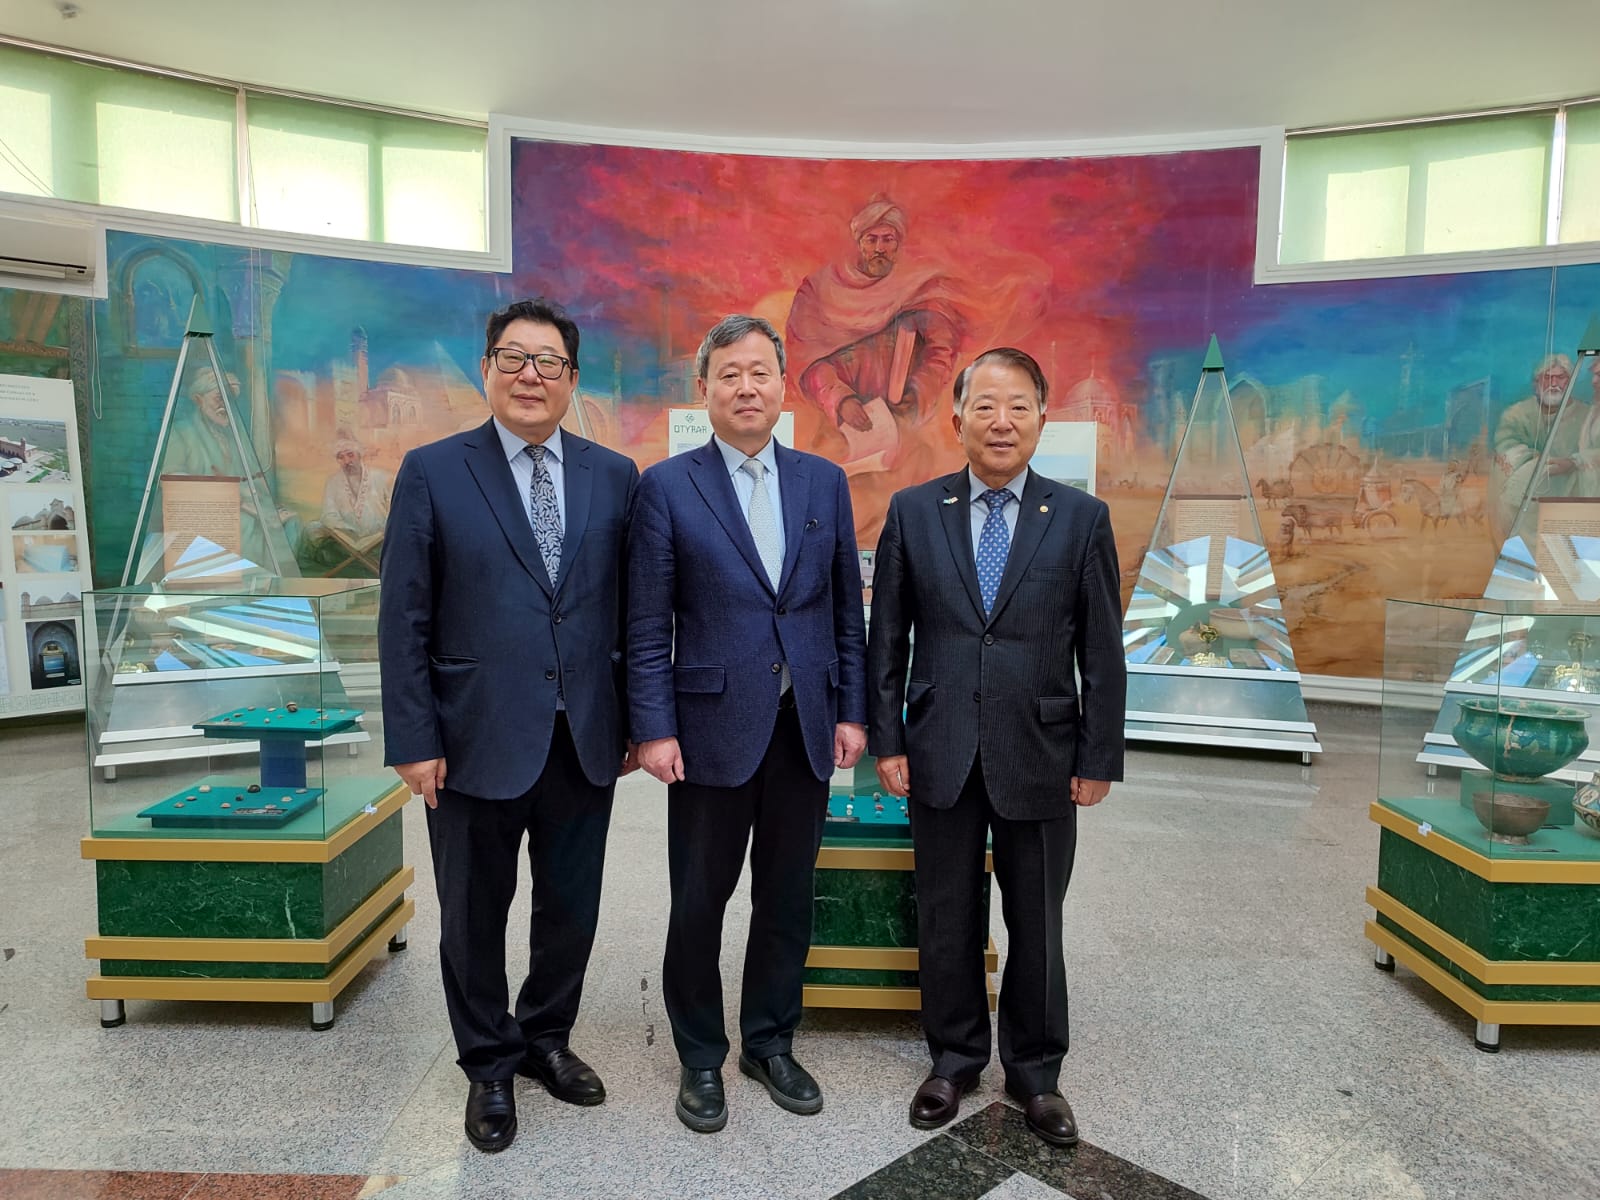 Chairman of the Board - Rector of Al-Farabi Kazakh National University Zhanseit Tuimebayev held a meeting with General Director of Hyundai Hospital in South Korea Kim Boo Sop